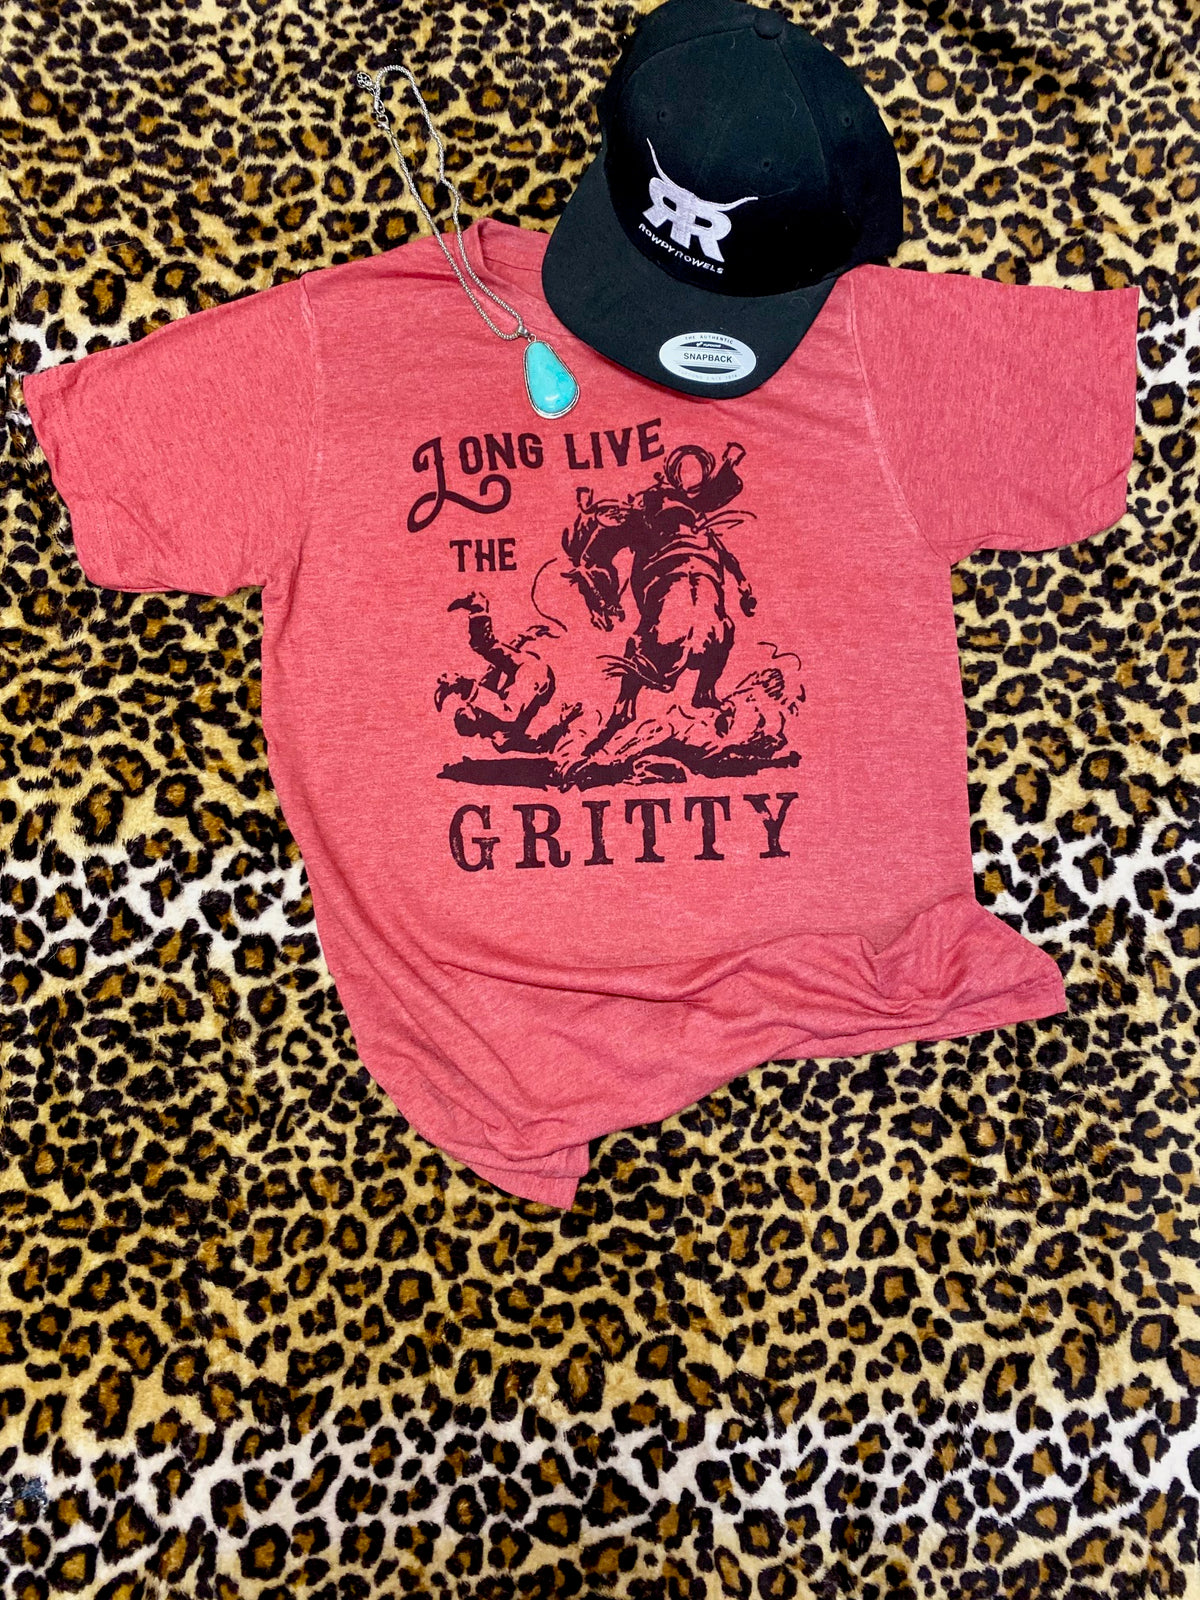 Gritty Jerseys, Gritty Shirts, Apparel, Gritty Gear